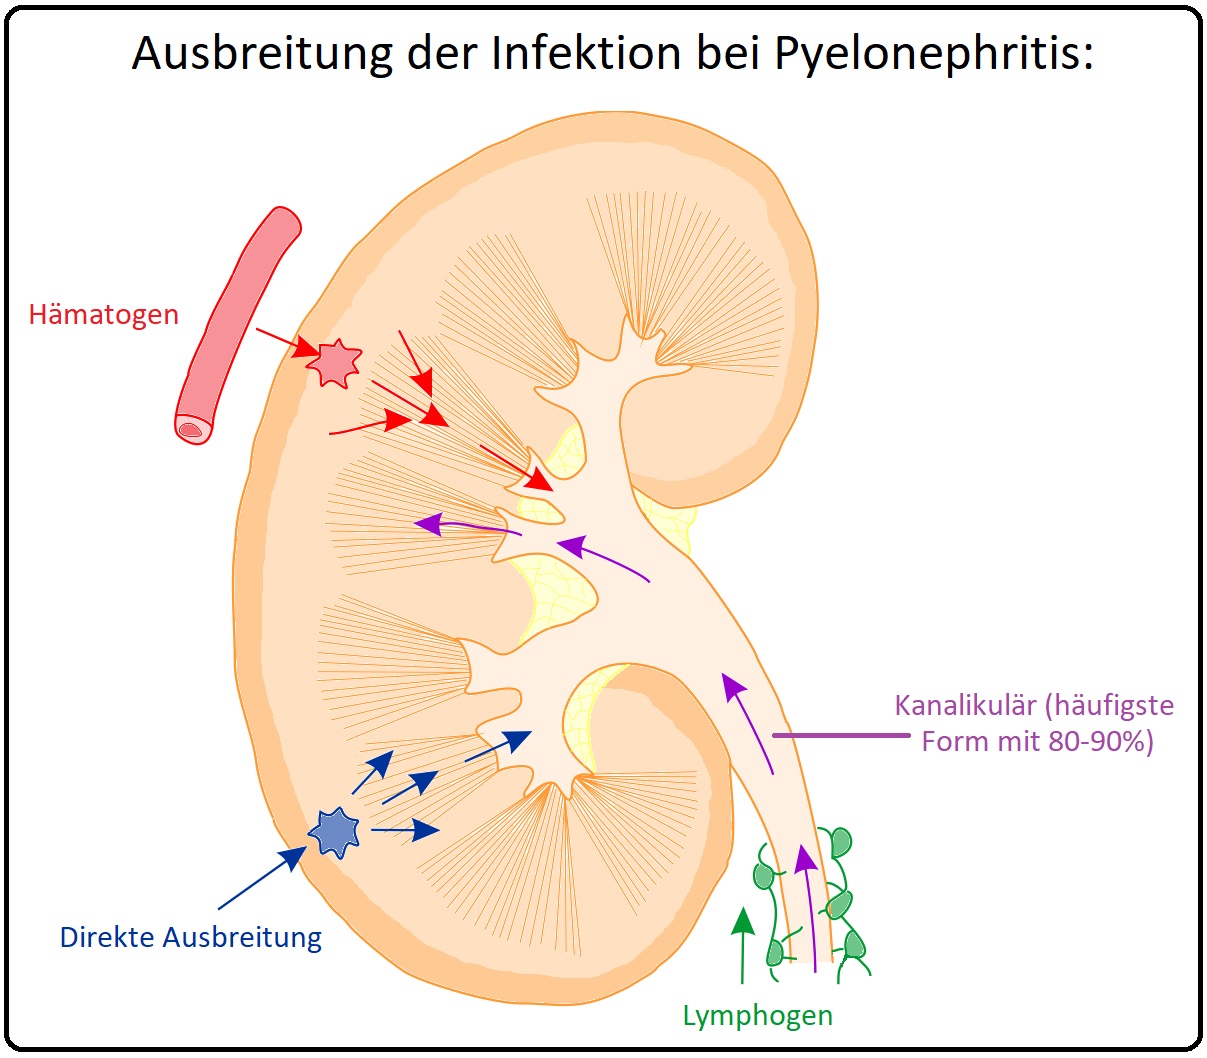 815 Ausbreitung der Infektion bei Pyelonephritis